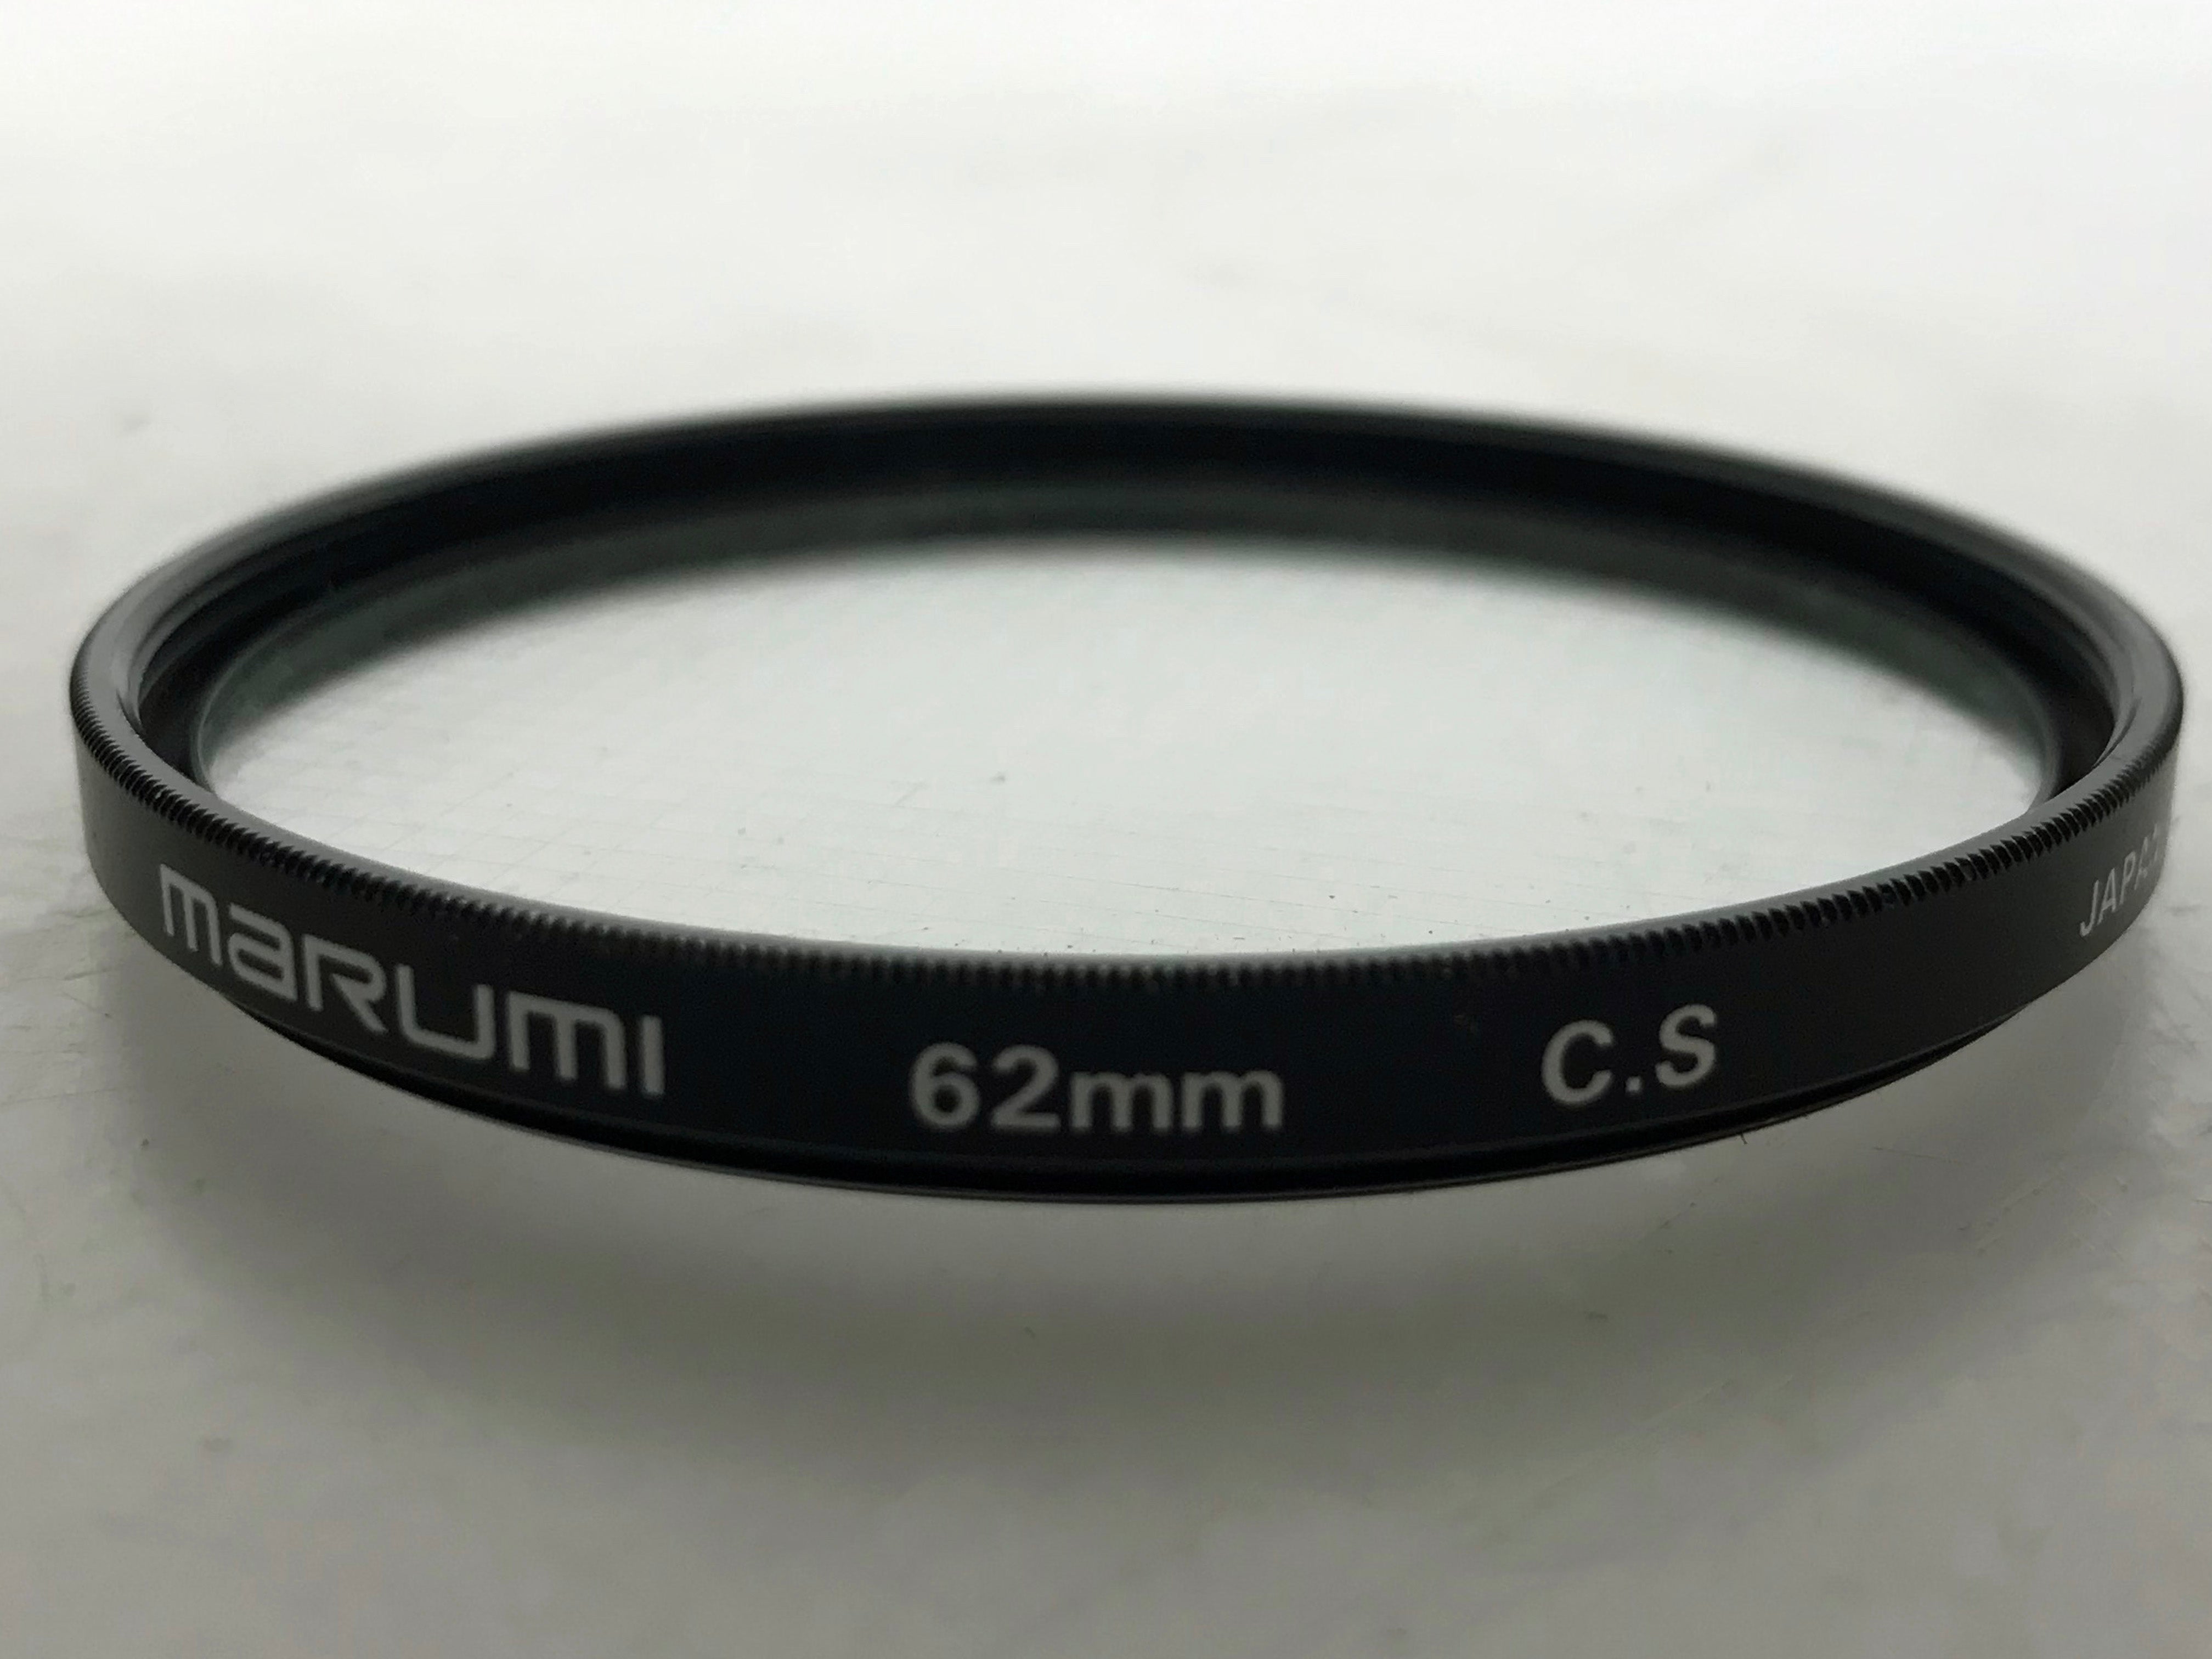 Marumi 62mm C.S Filter